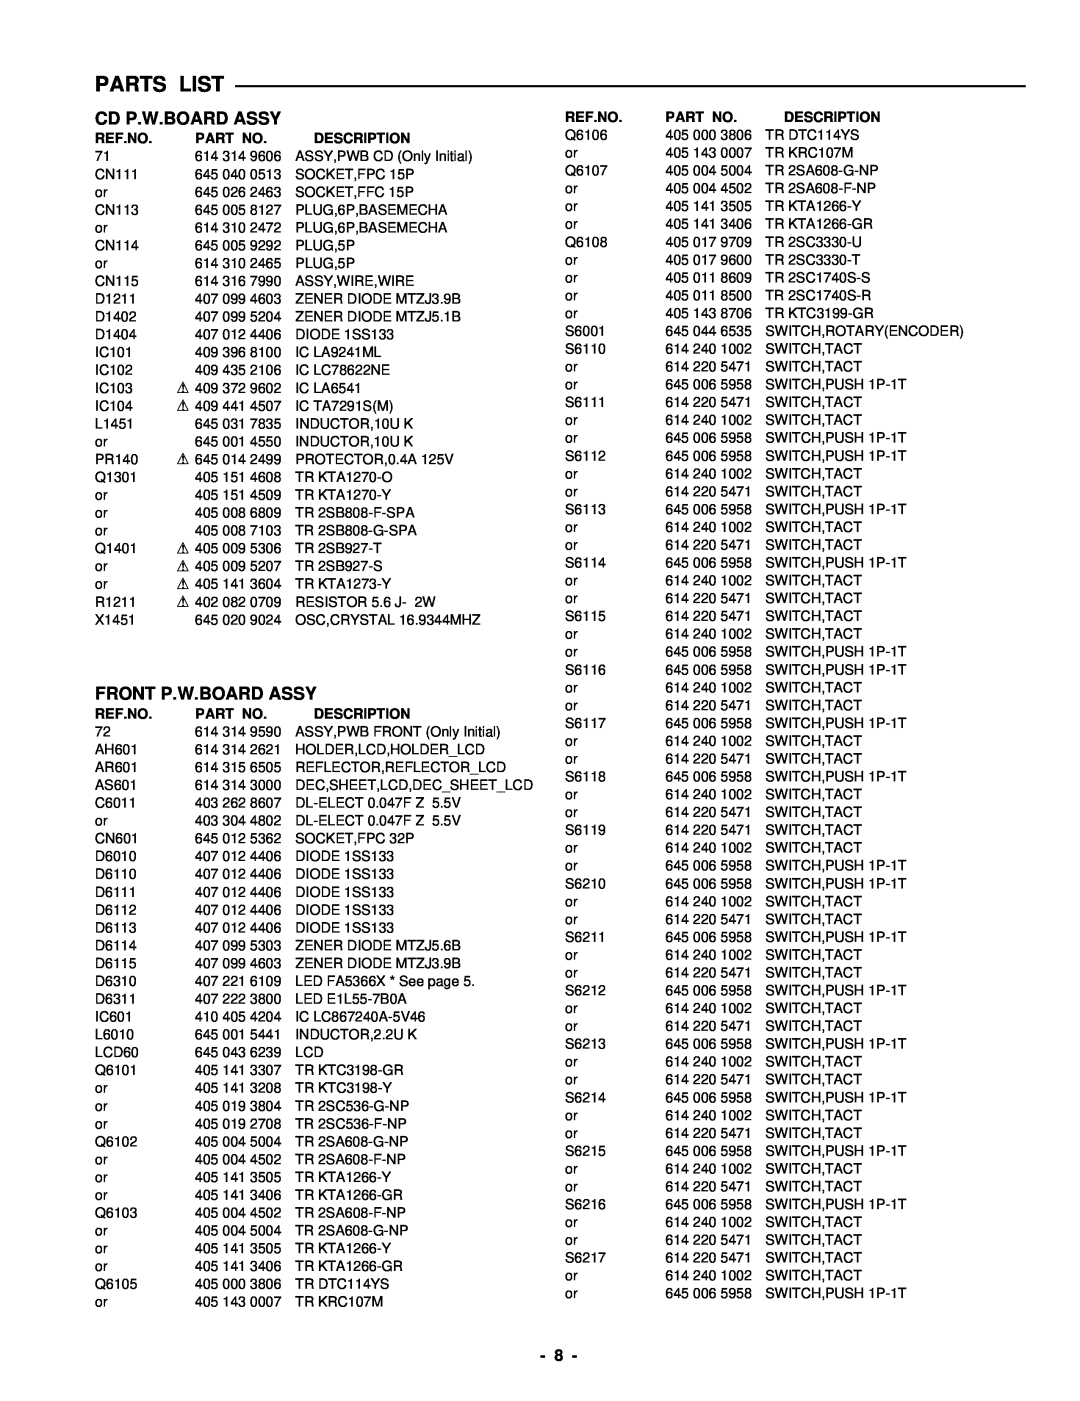 Sanyo DC-DA370 service manual Cd P.W.Board Assy, Front P.W.Board Assy, Parts List 